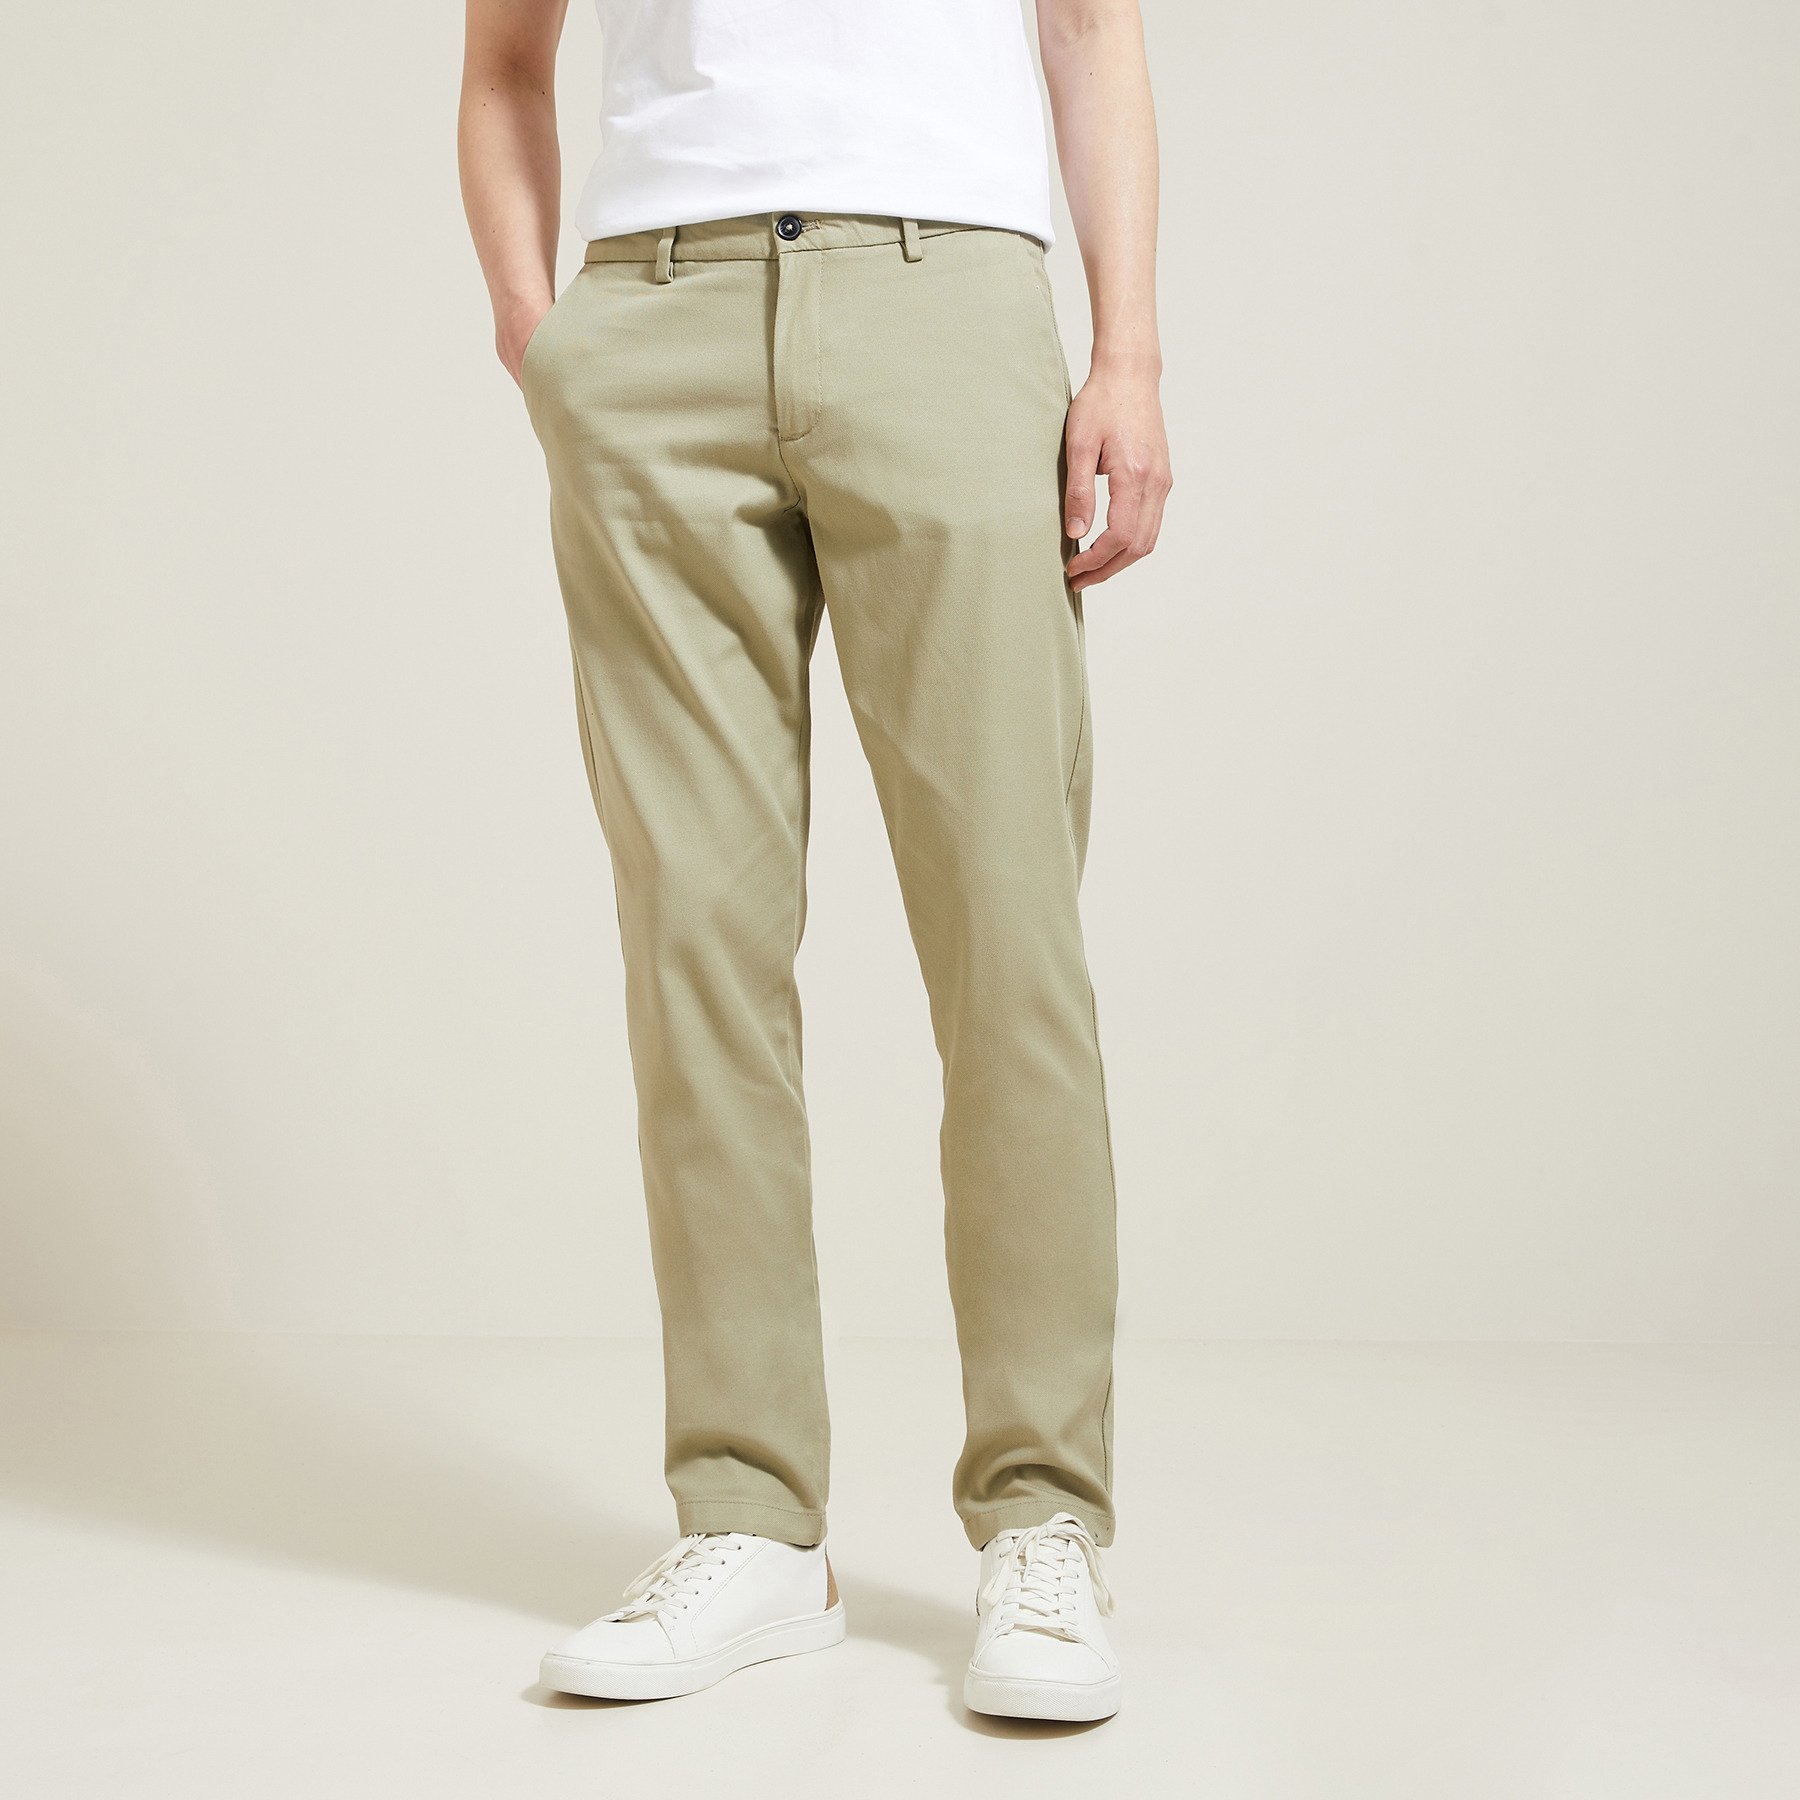 Pantalon chino slim urbain "le parfait by JULES" Vert clair 36 98% Coton, 2% Elasthanne Homme Jules